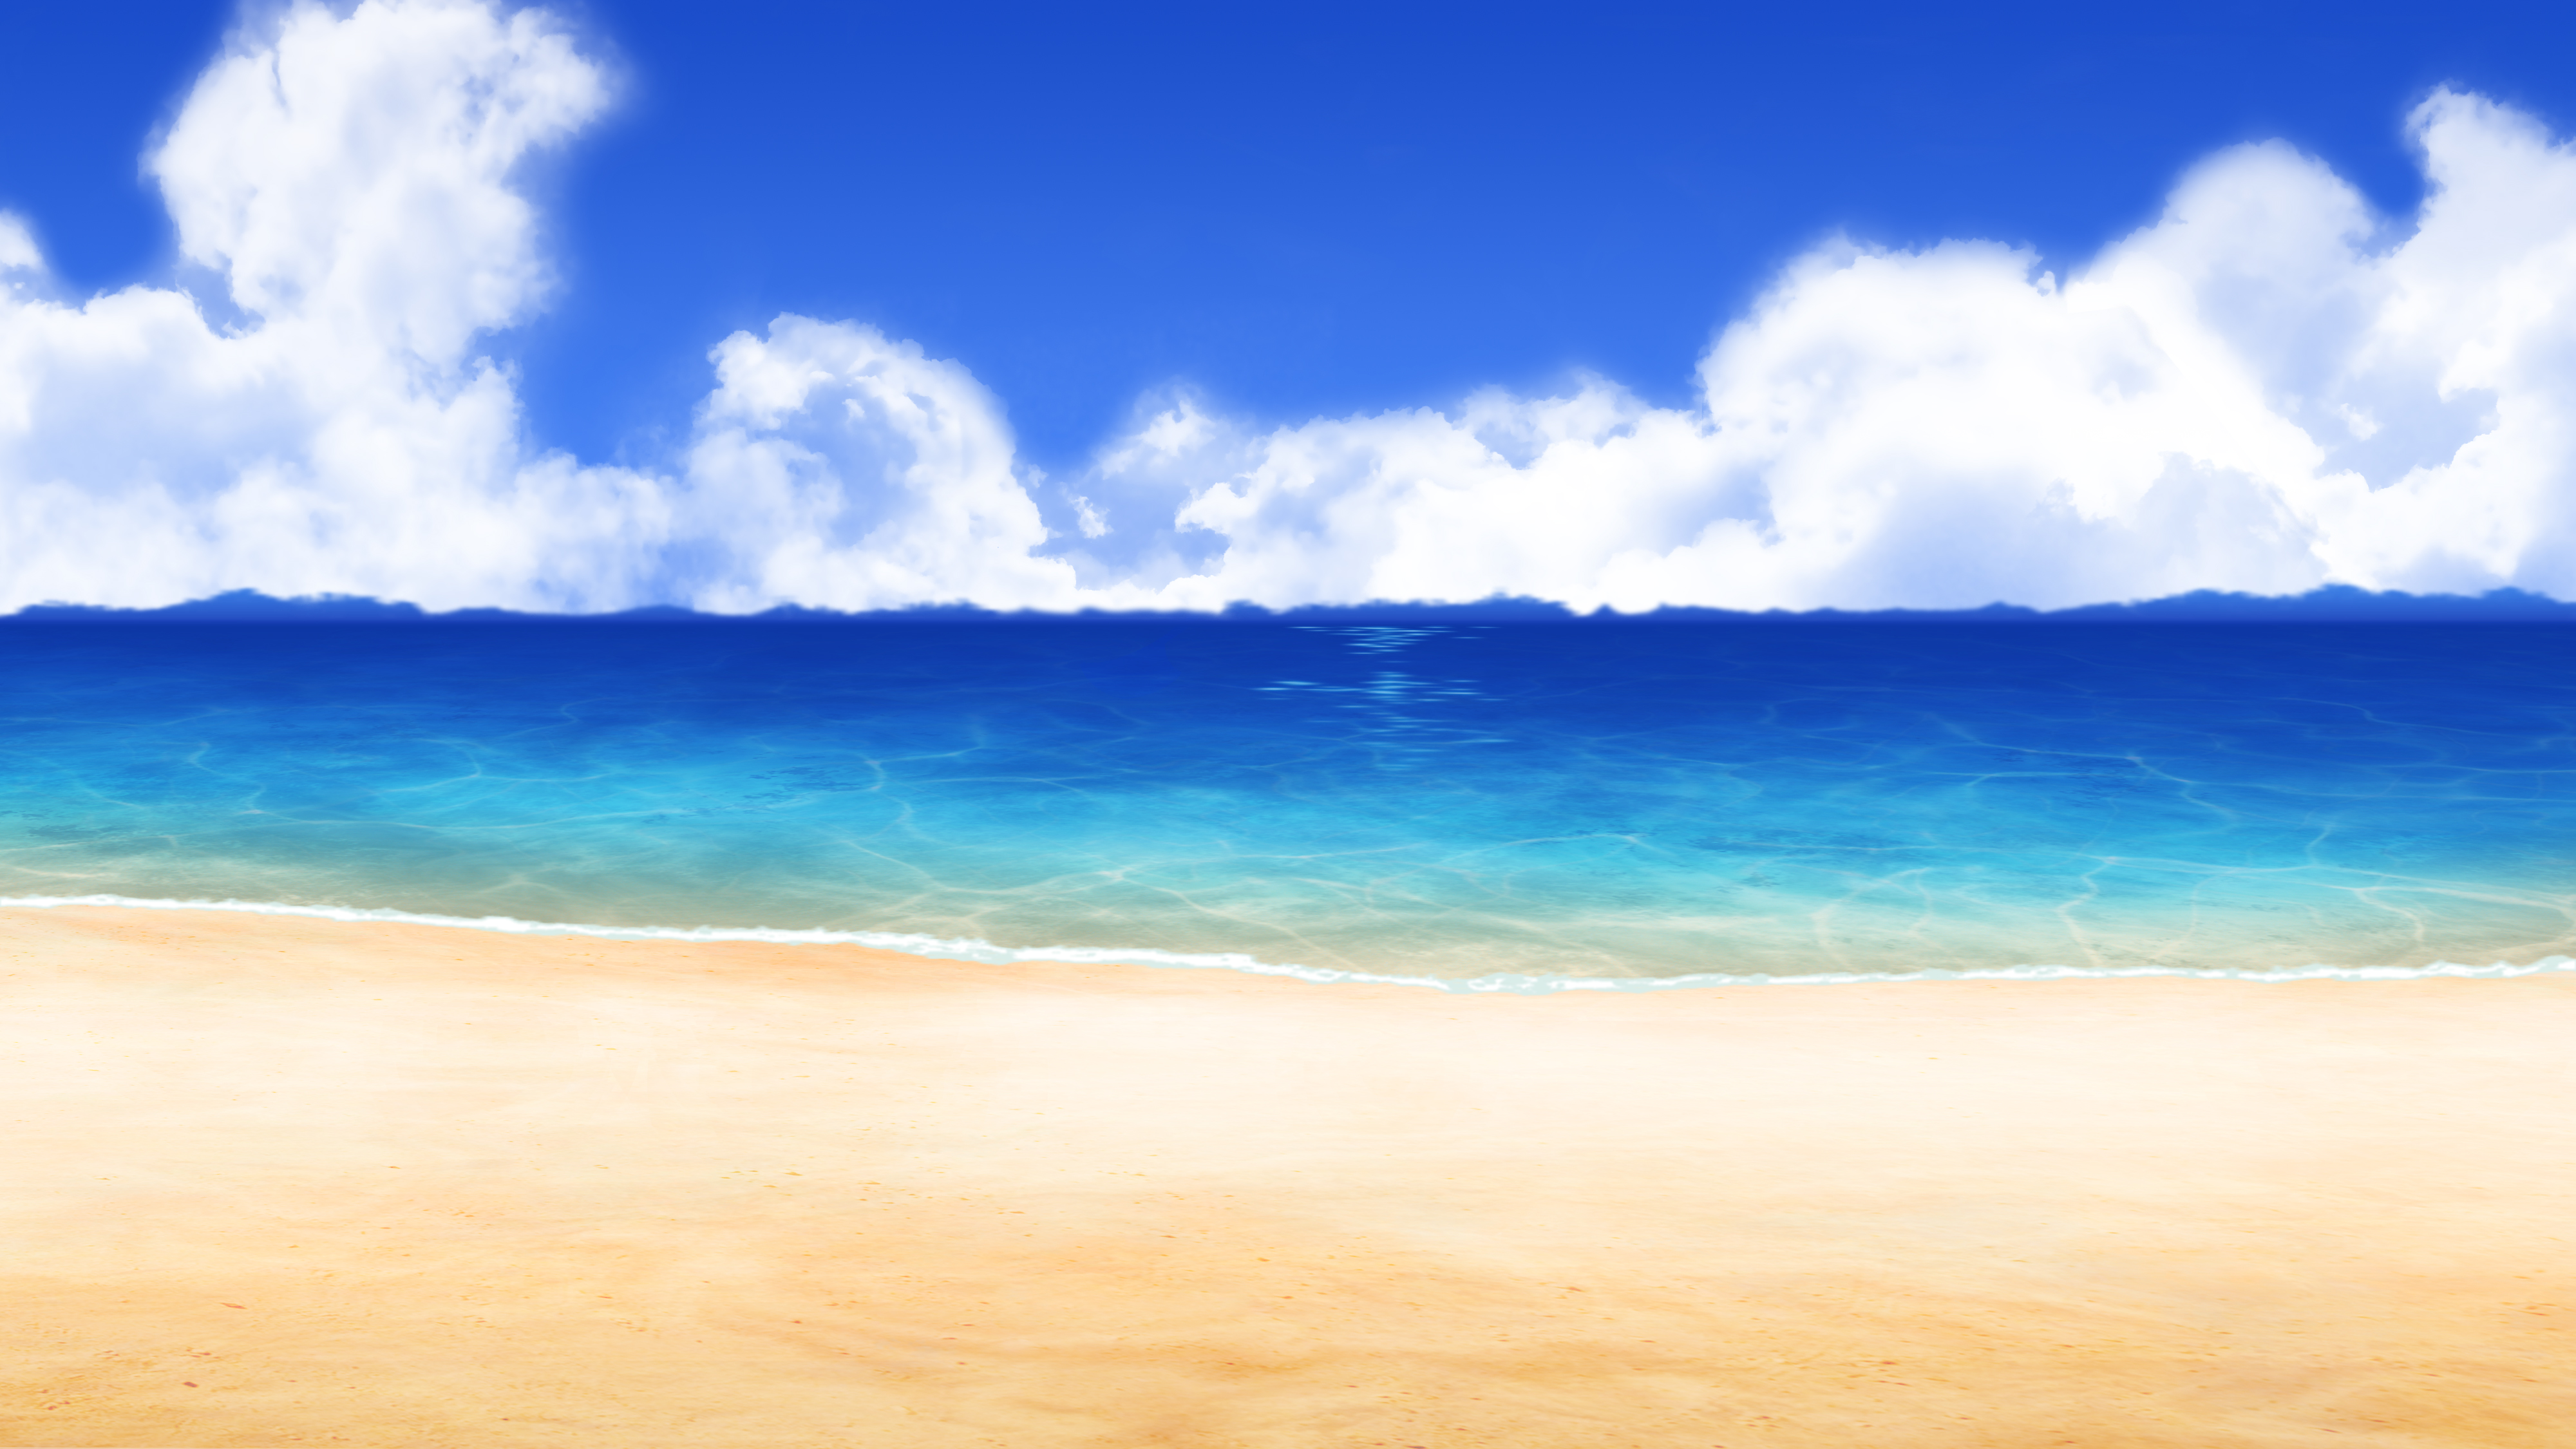 background Anime-styled beach type 10 by akiranyo on DeviantArt